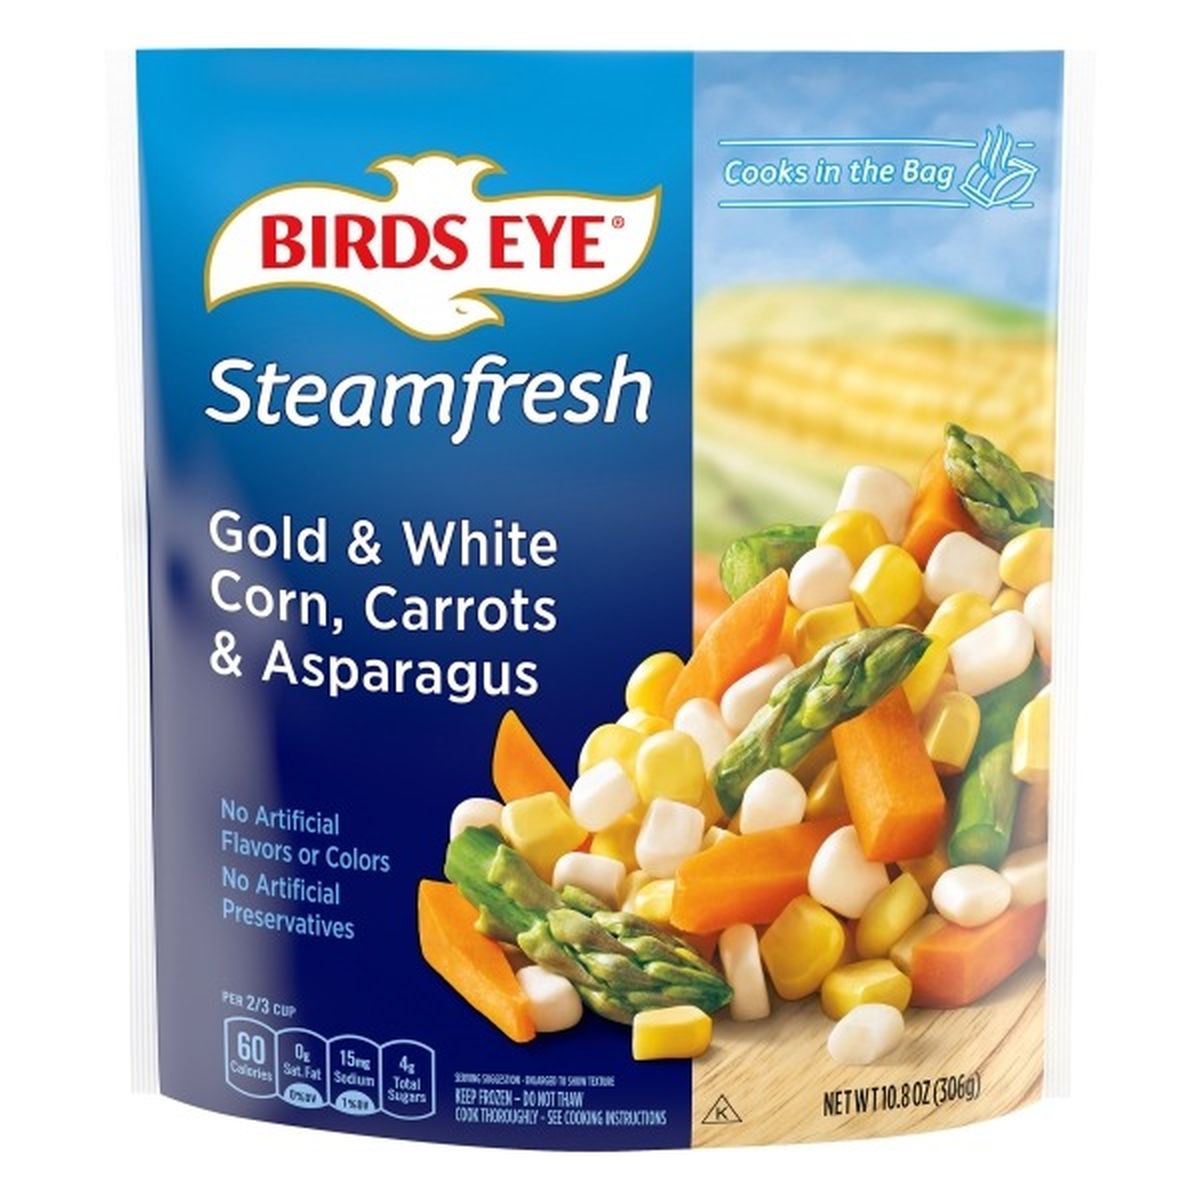 Calories in Birds Eye SteamFresh Gold & White Corn, Carrots & Asparagus